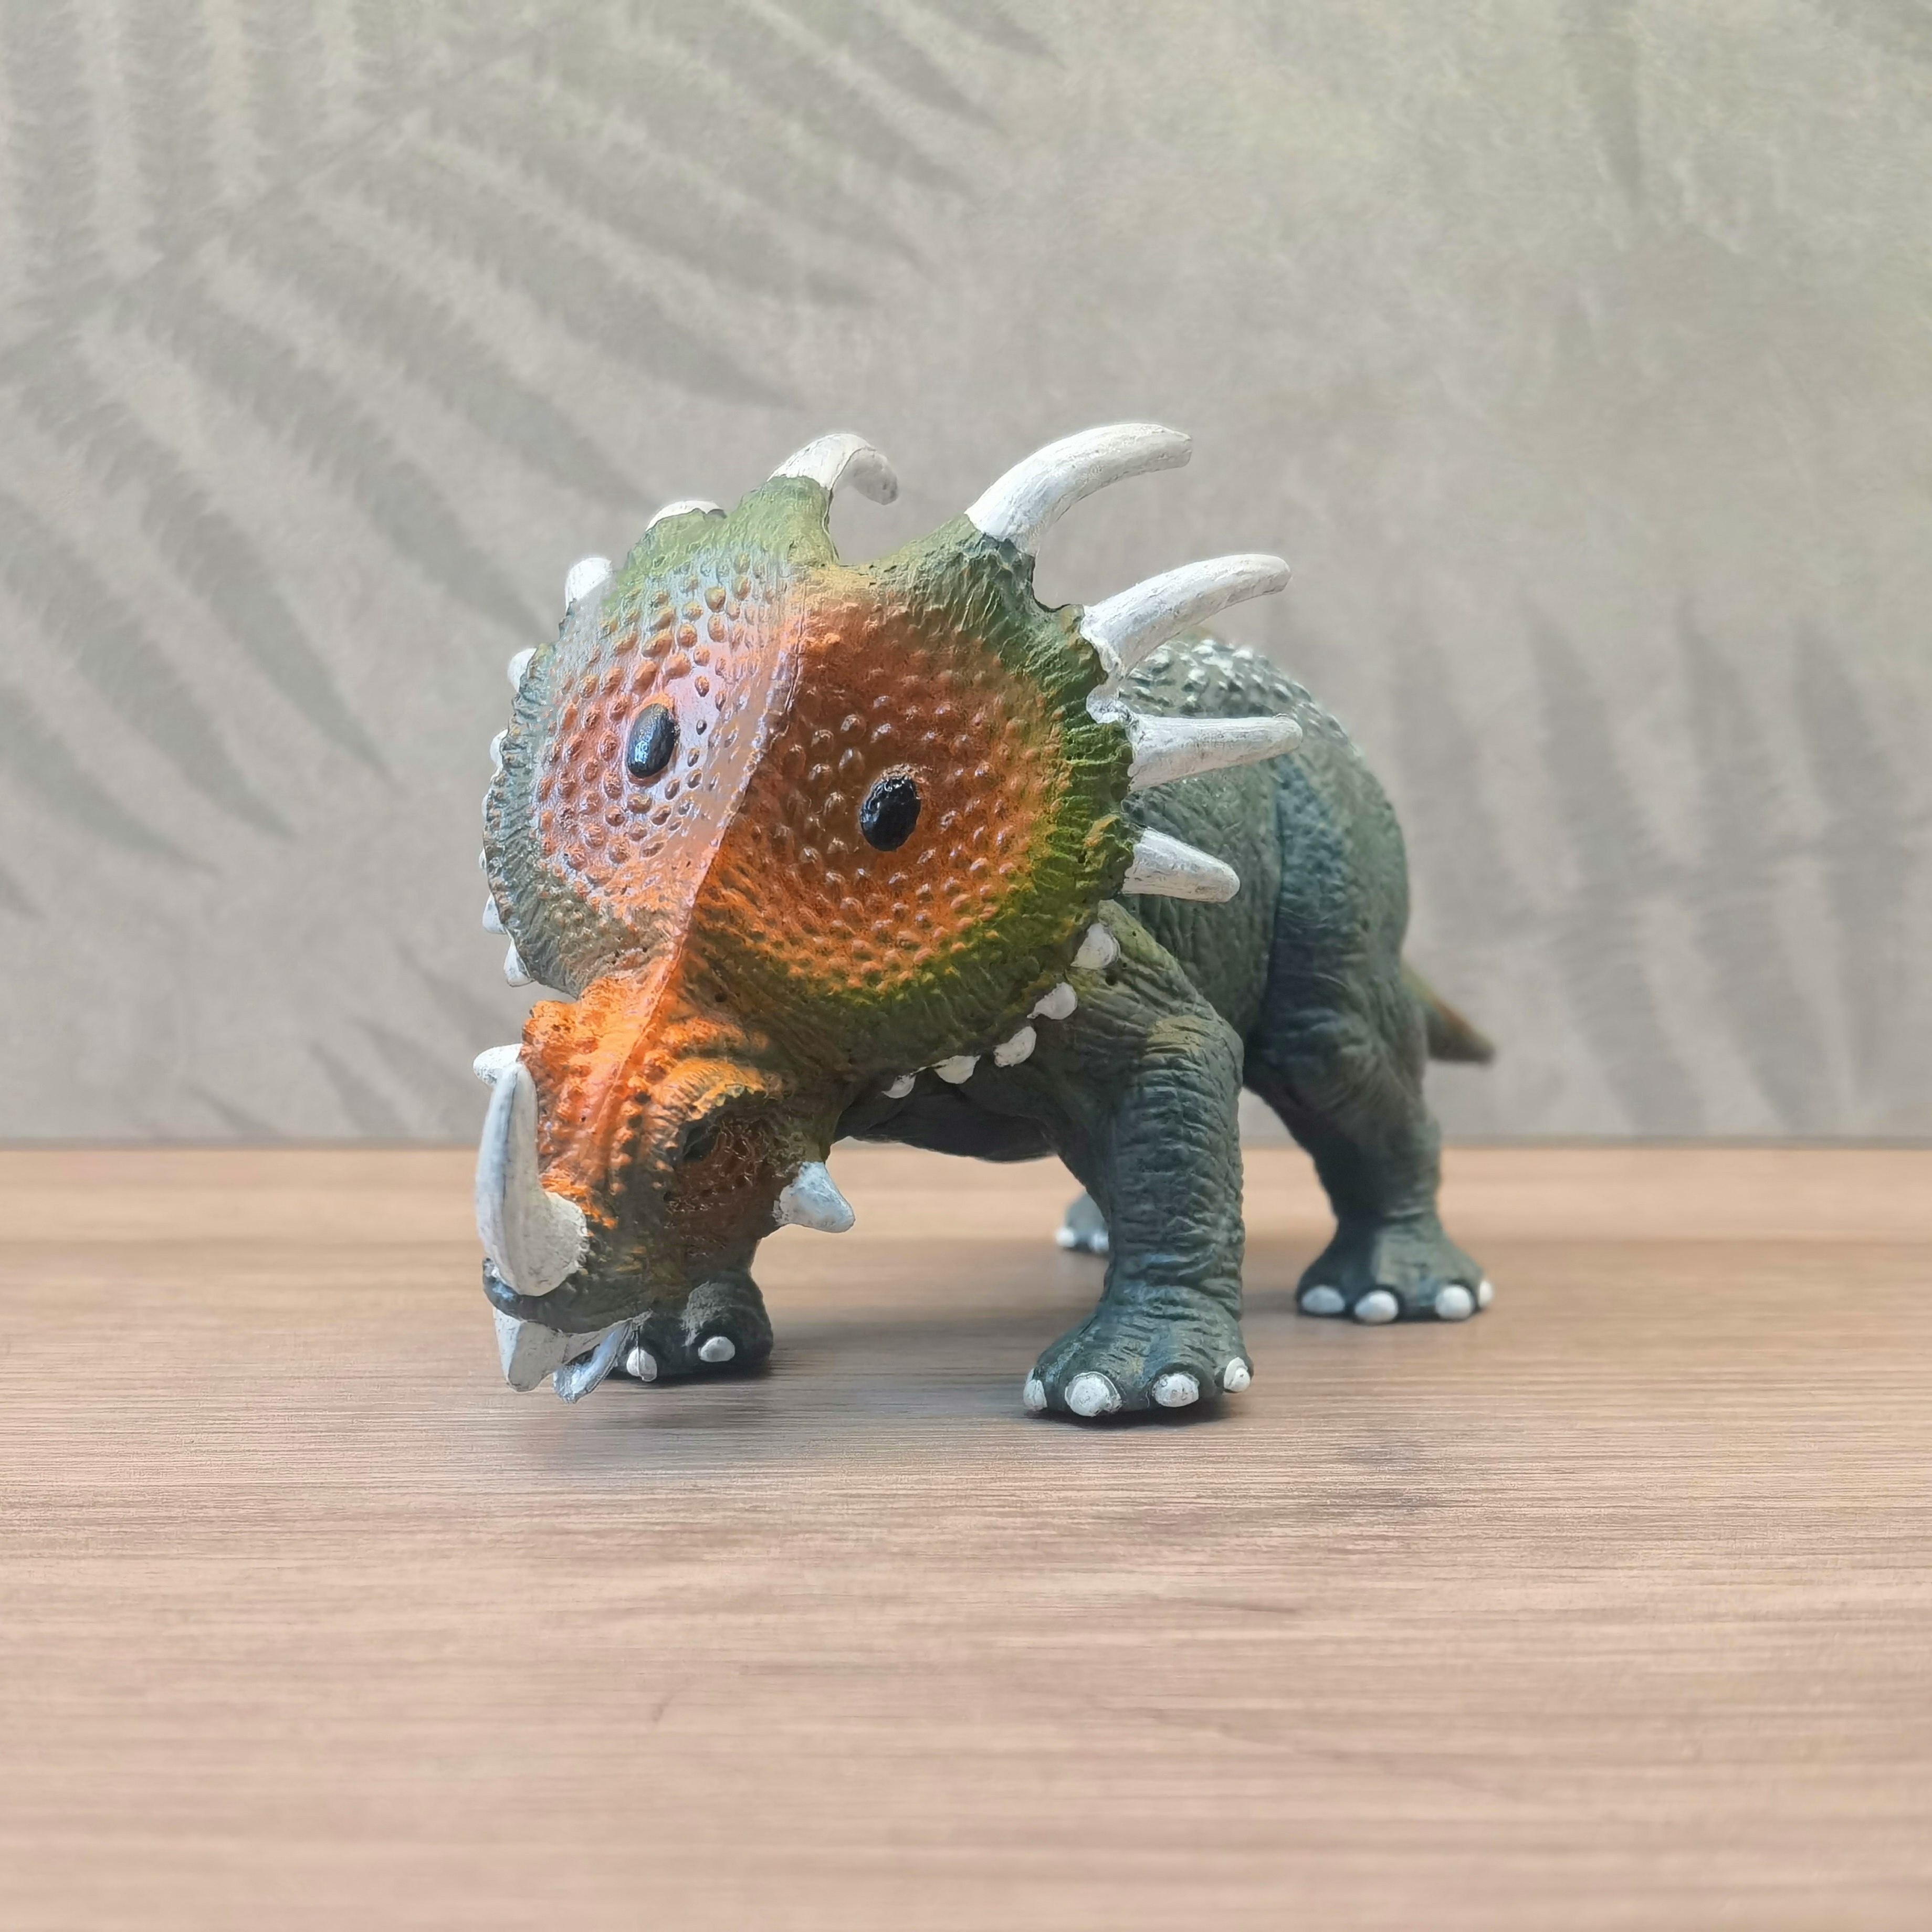 Figurine dinosaure Styracosaure animal miniature dès 3 ans